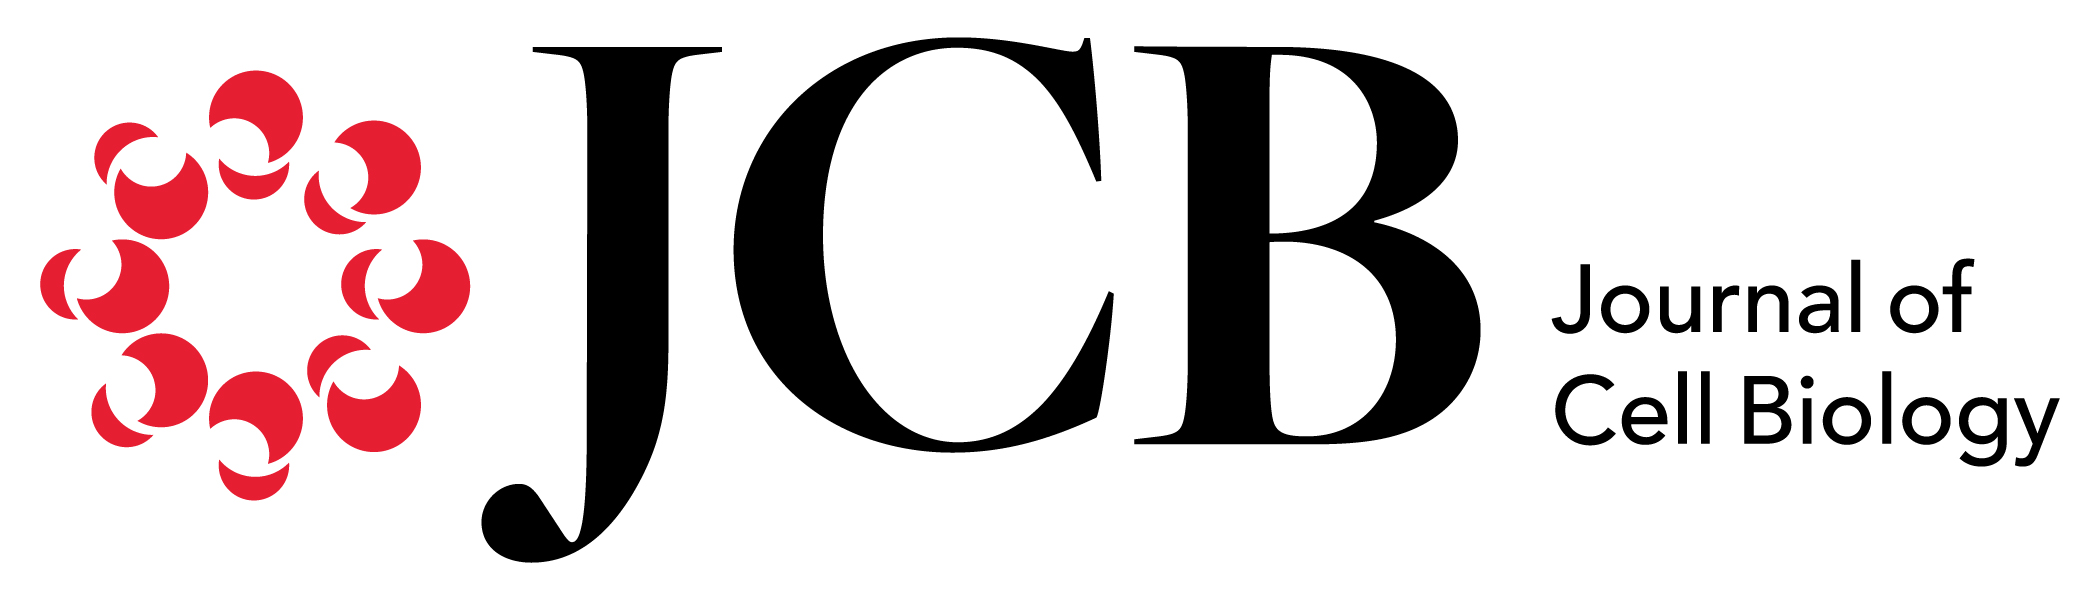 2019-06/jcb-logo.jpg